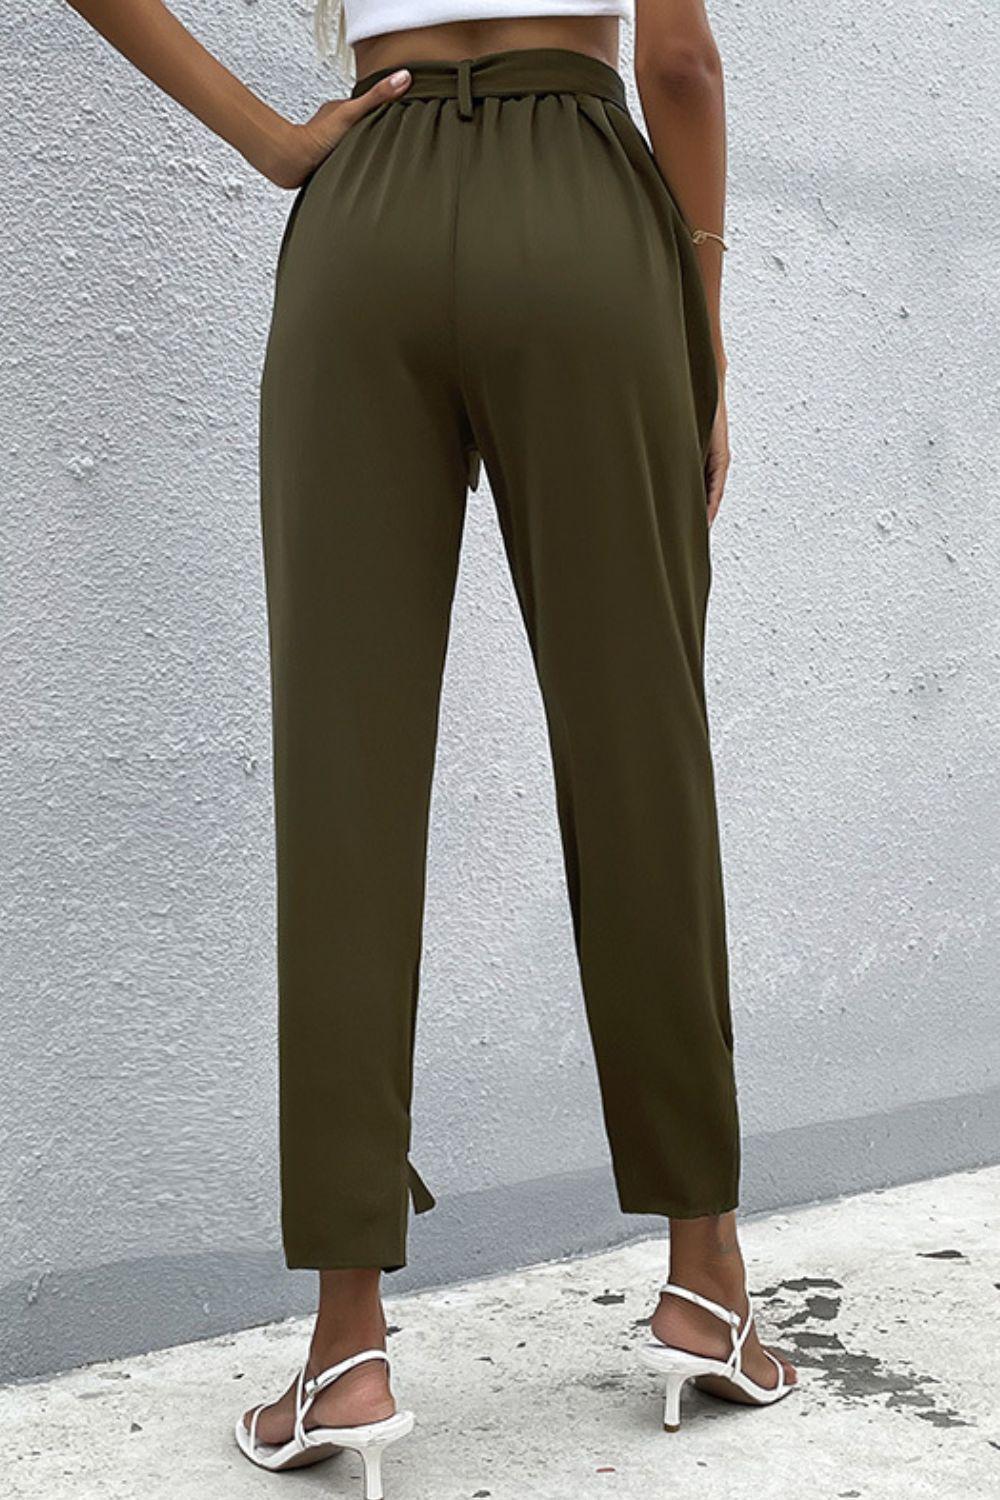 Expressive Pockets High Waist Tie Front Pants - MXSTUDIO.COM